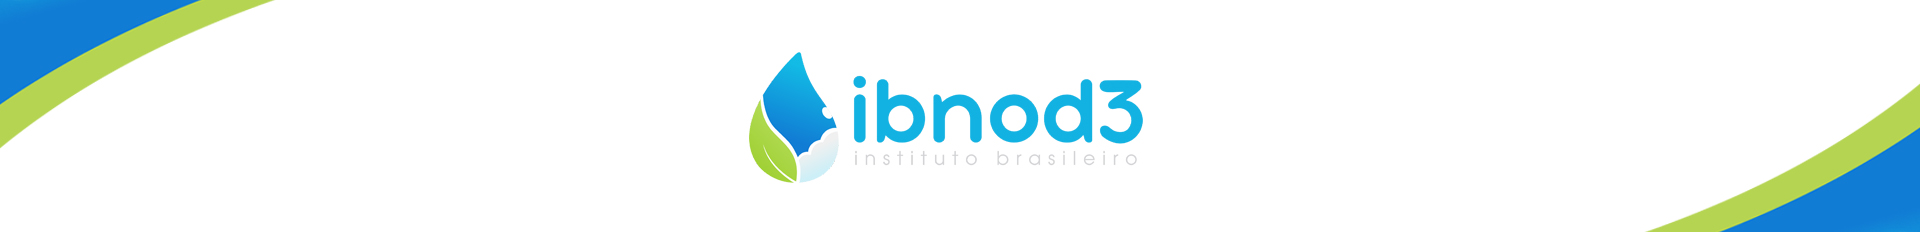 banner ibnod3 br